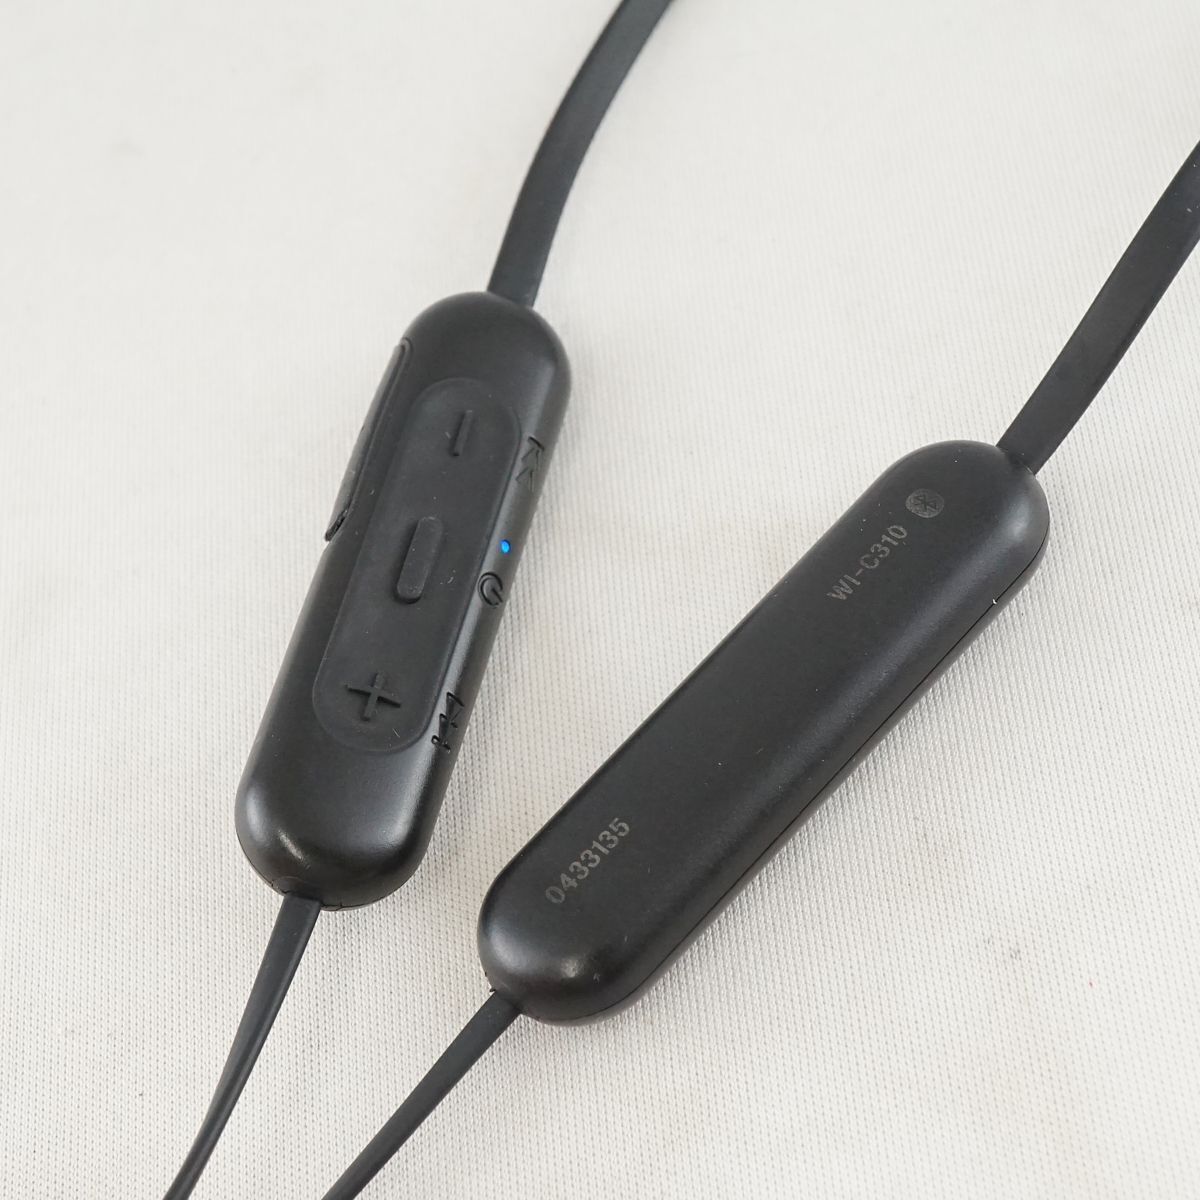 SONY WI-C310 ワイヤレスイヤホン USED品 Bluetooth ネックバンド マイク 長時間再生 高音質 ソニー ブラック 完動品 S V0315_画像4